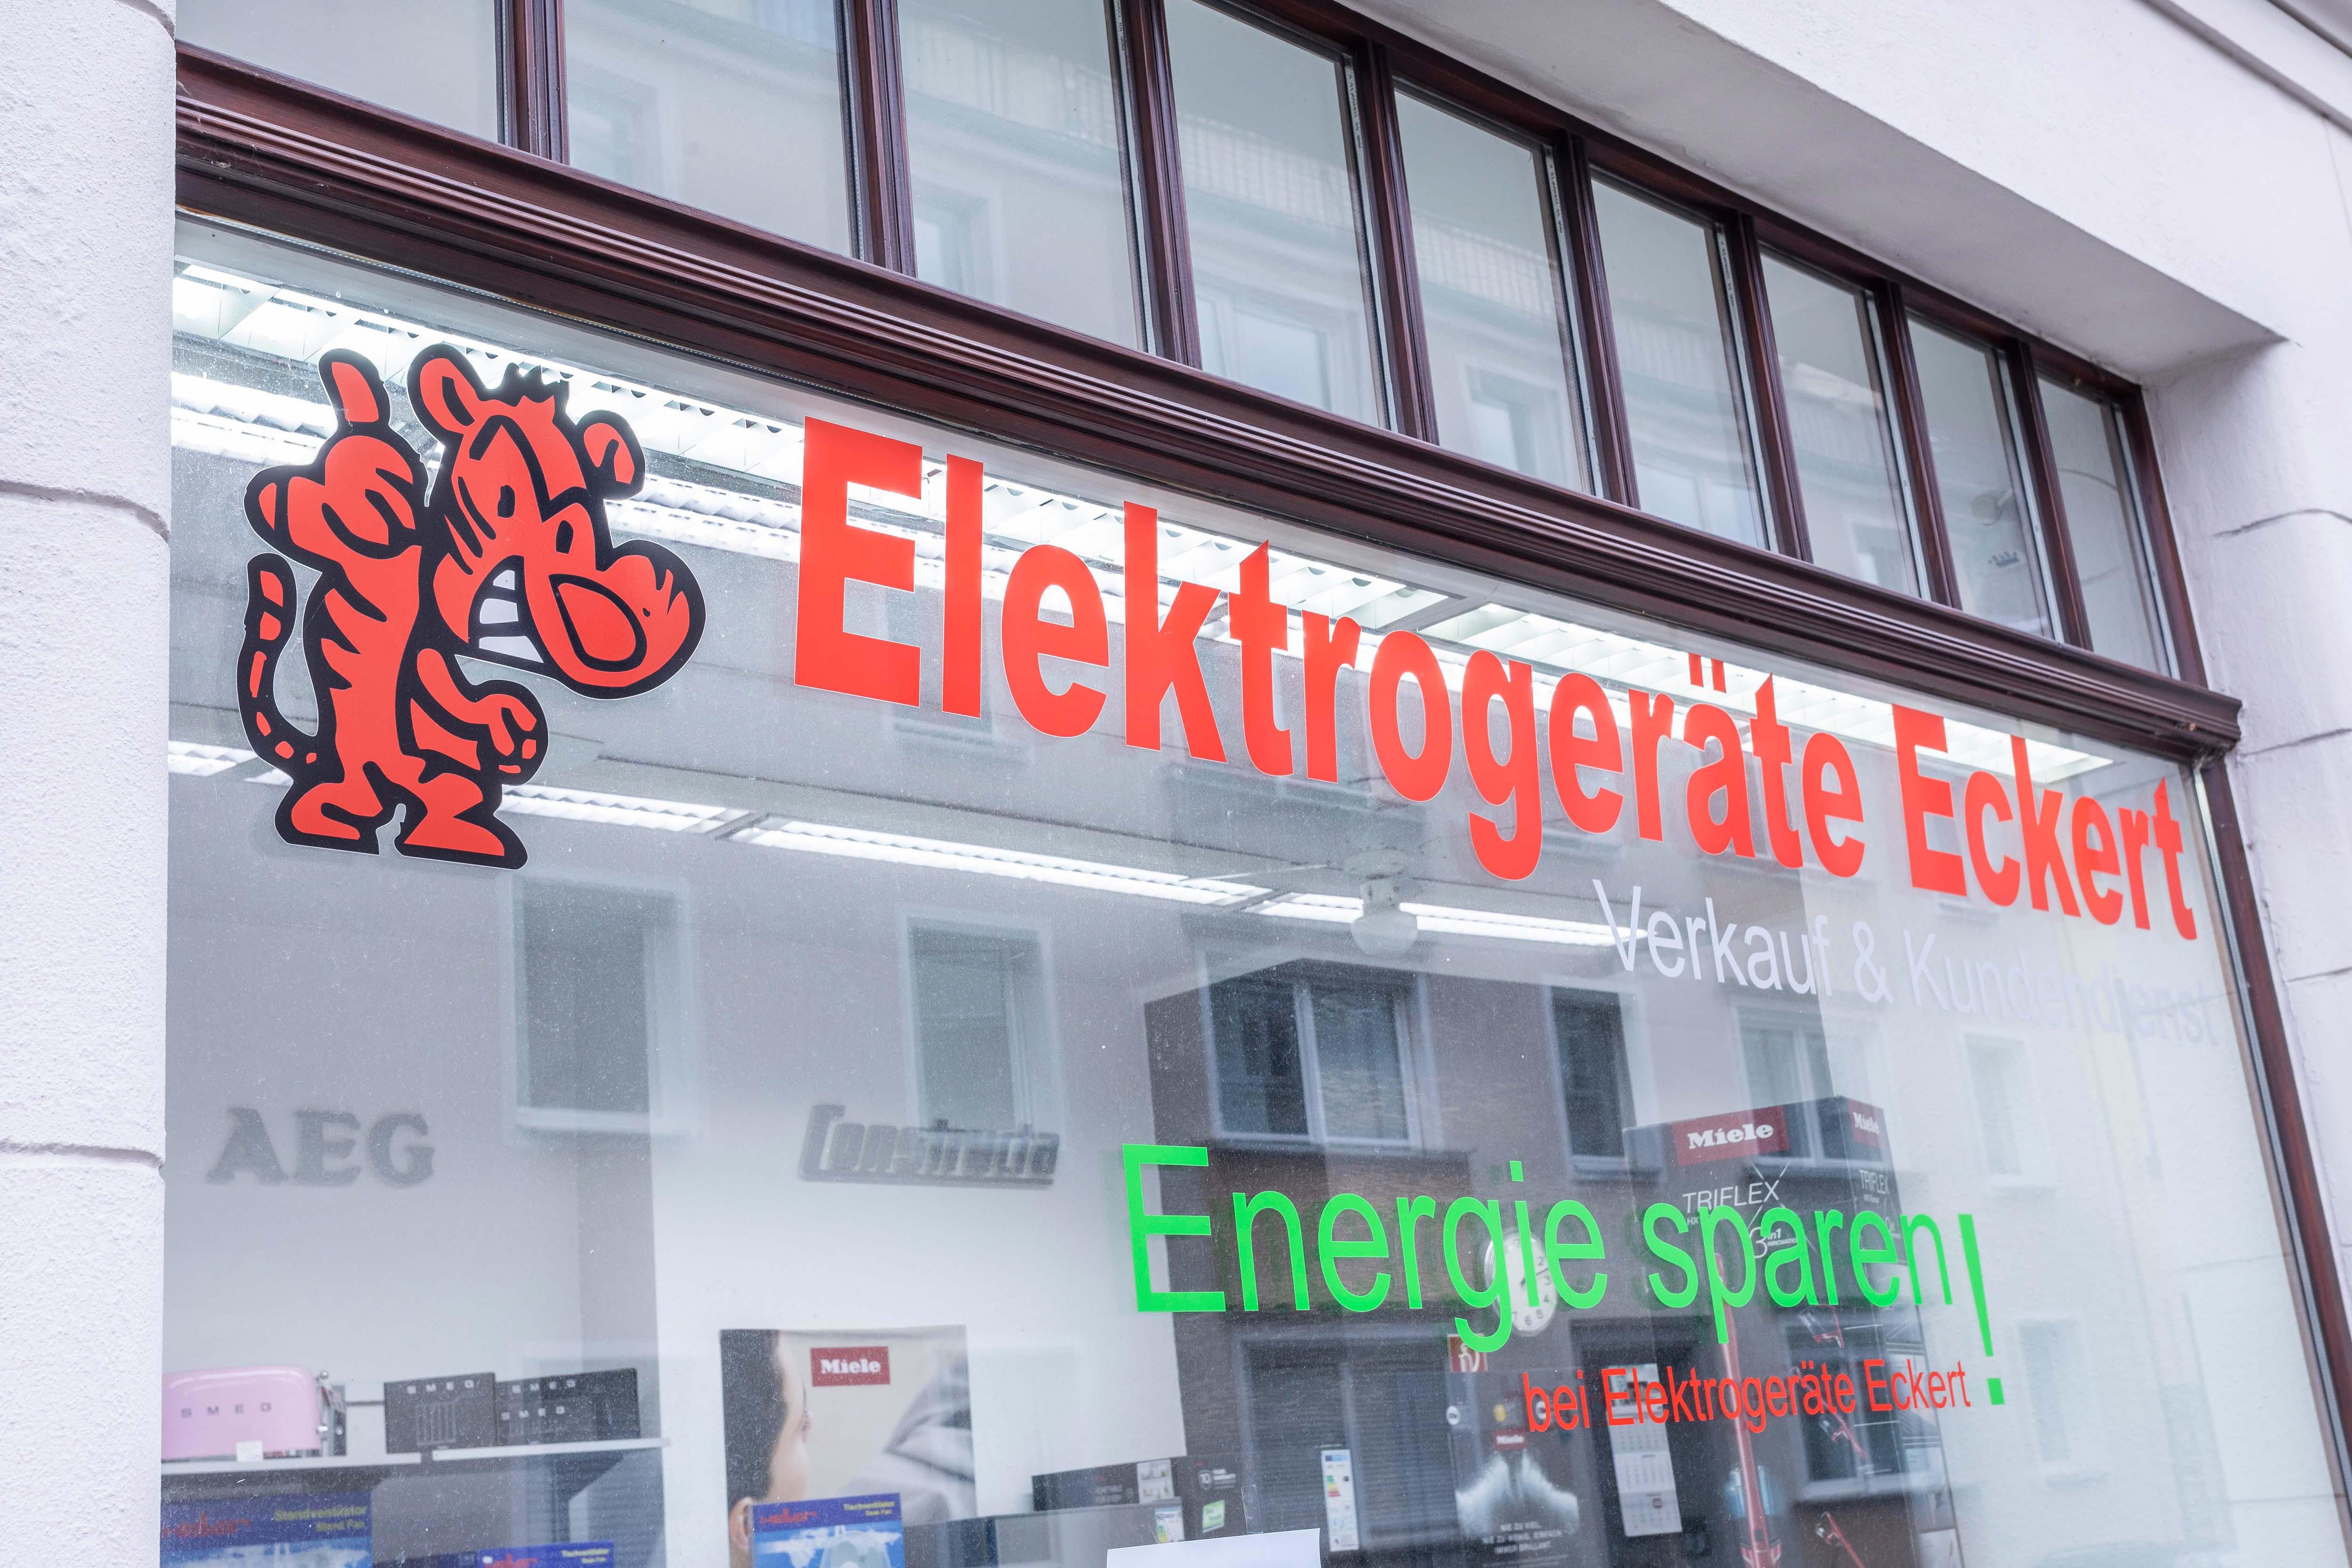 Elektrogeräte Eckert, Ehrenfeldgürtel 153 in Köln